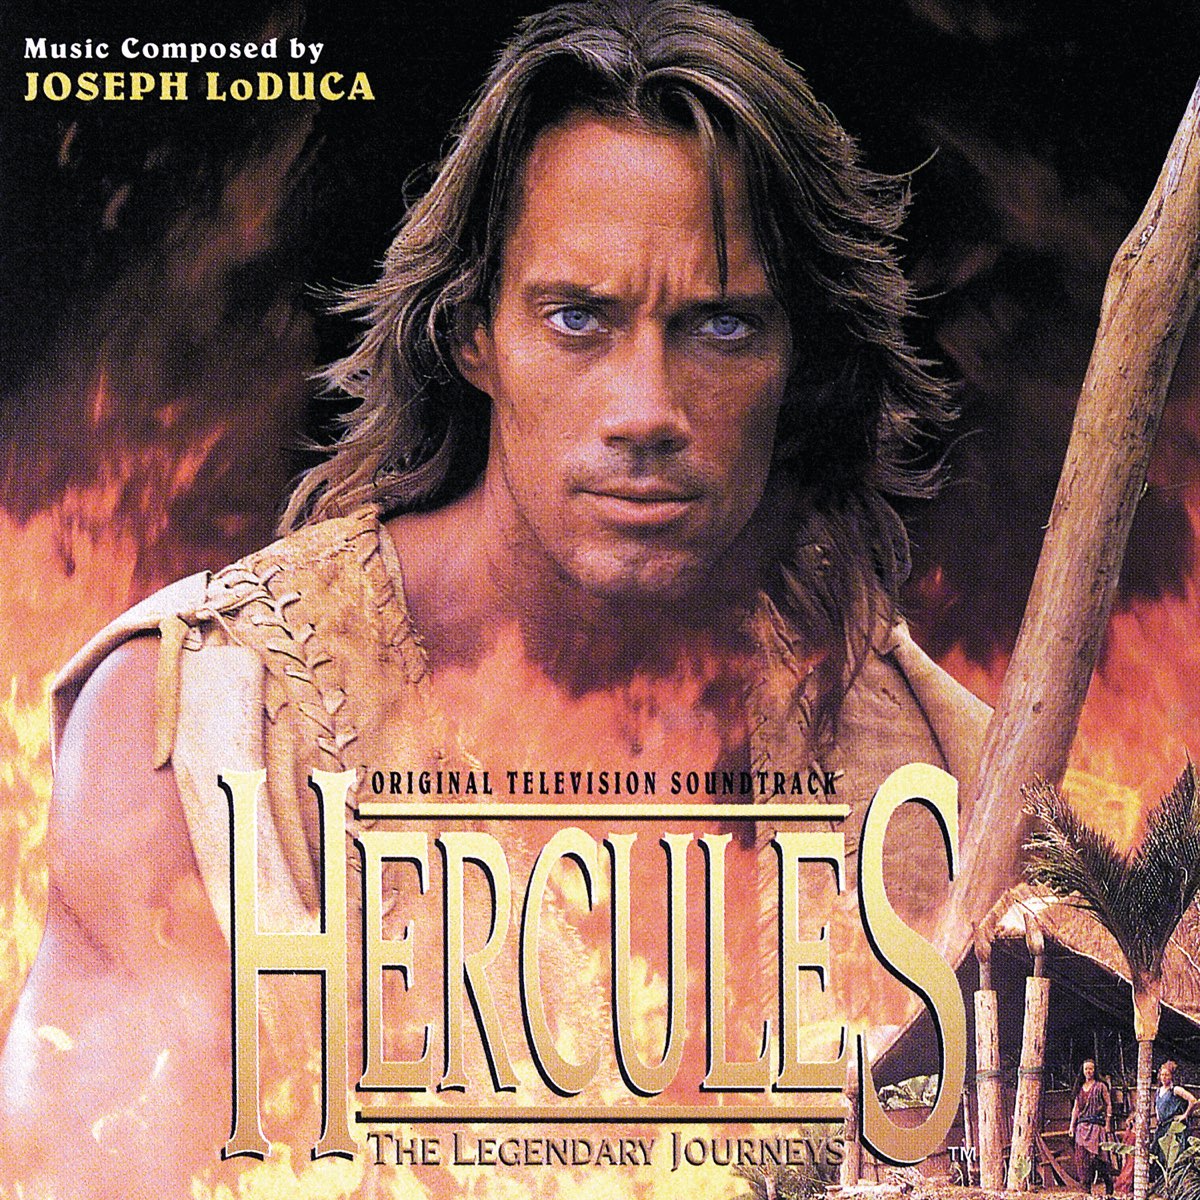 ‎hercules The Legendary Journeys Original Television Soundtrack By Joseph Loduca On Apple Music 4568